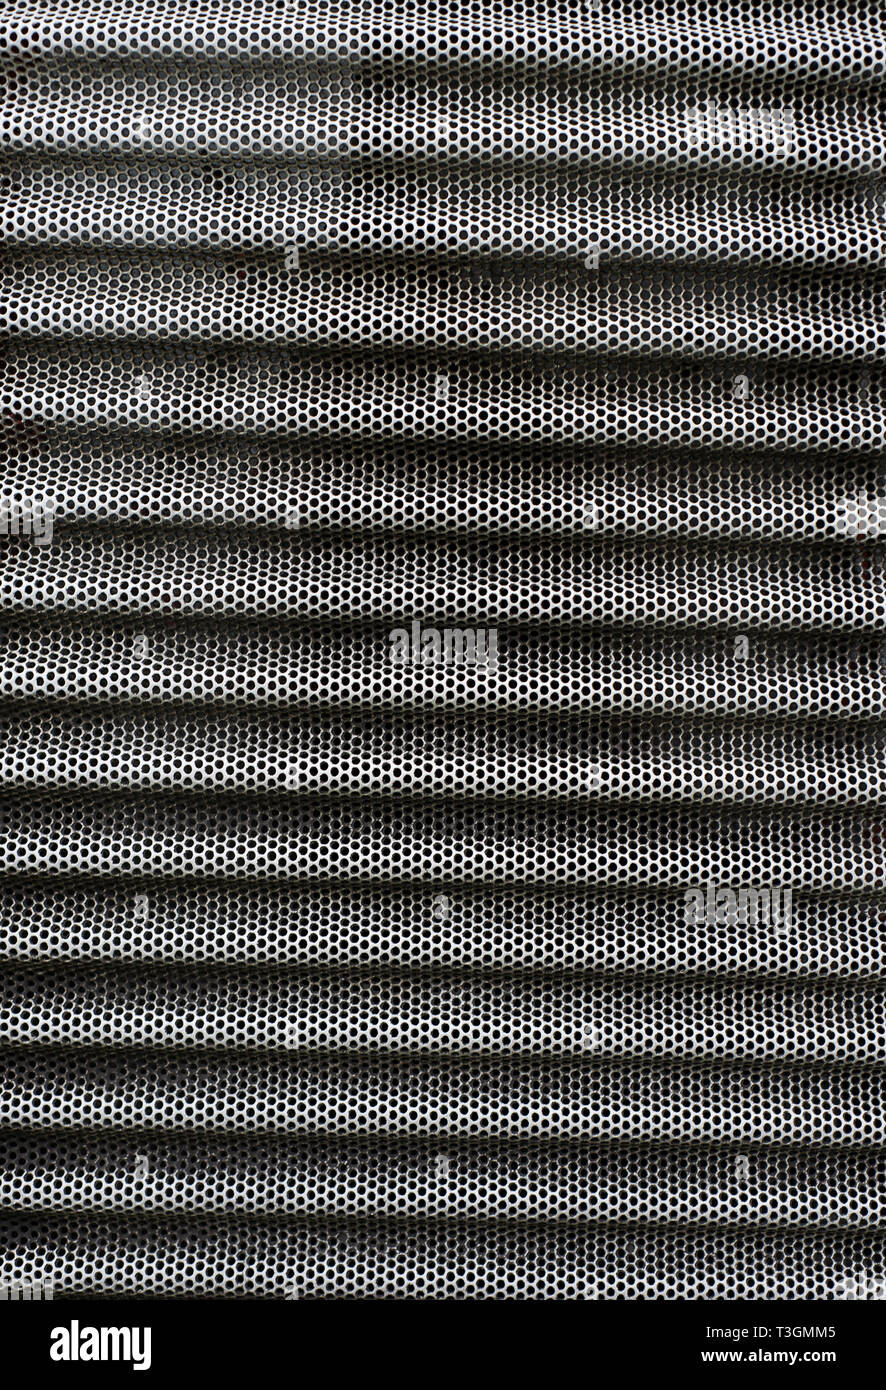 Shiny Metal Aluminium Mesh Grill Background Stock Photo 10308730